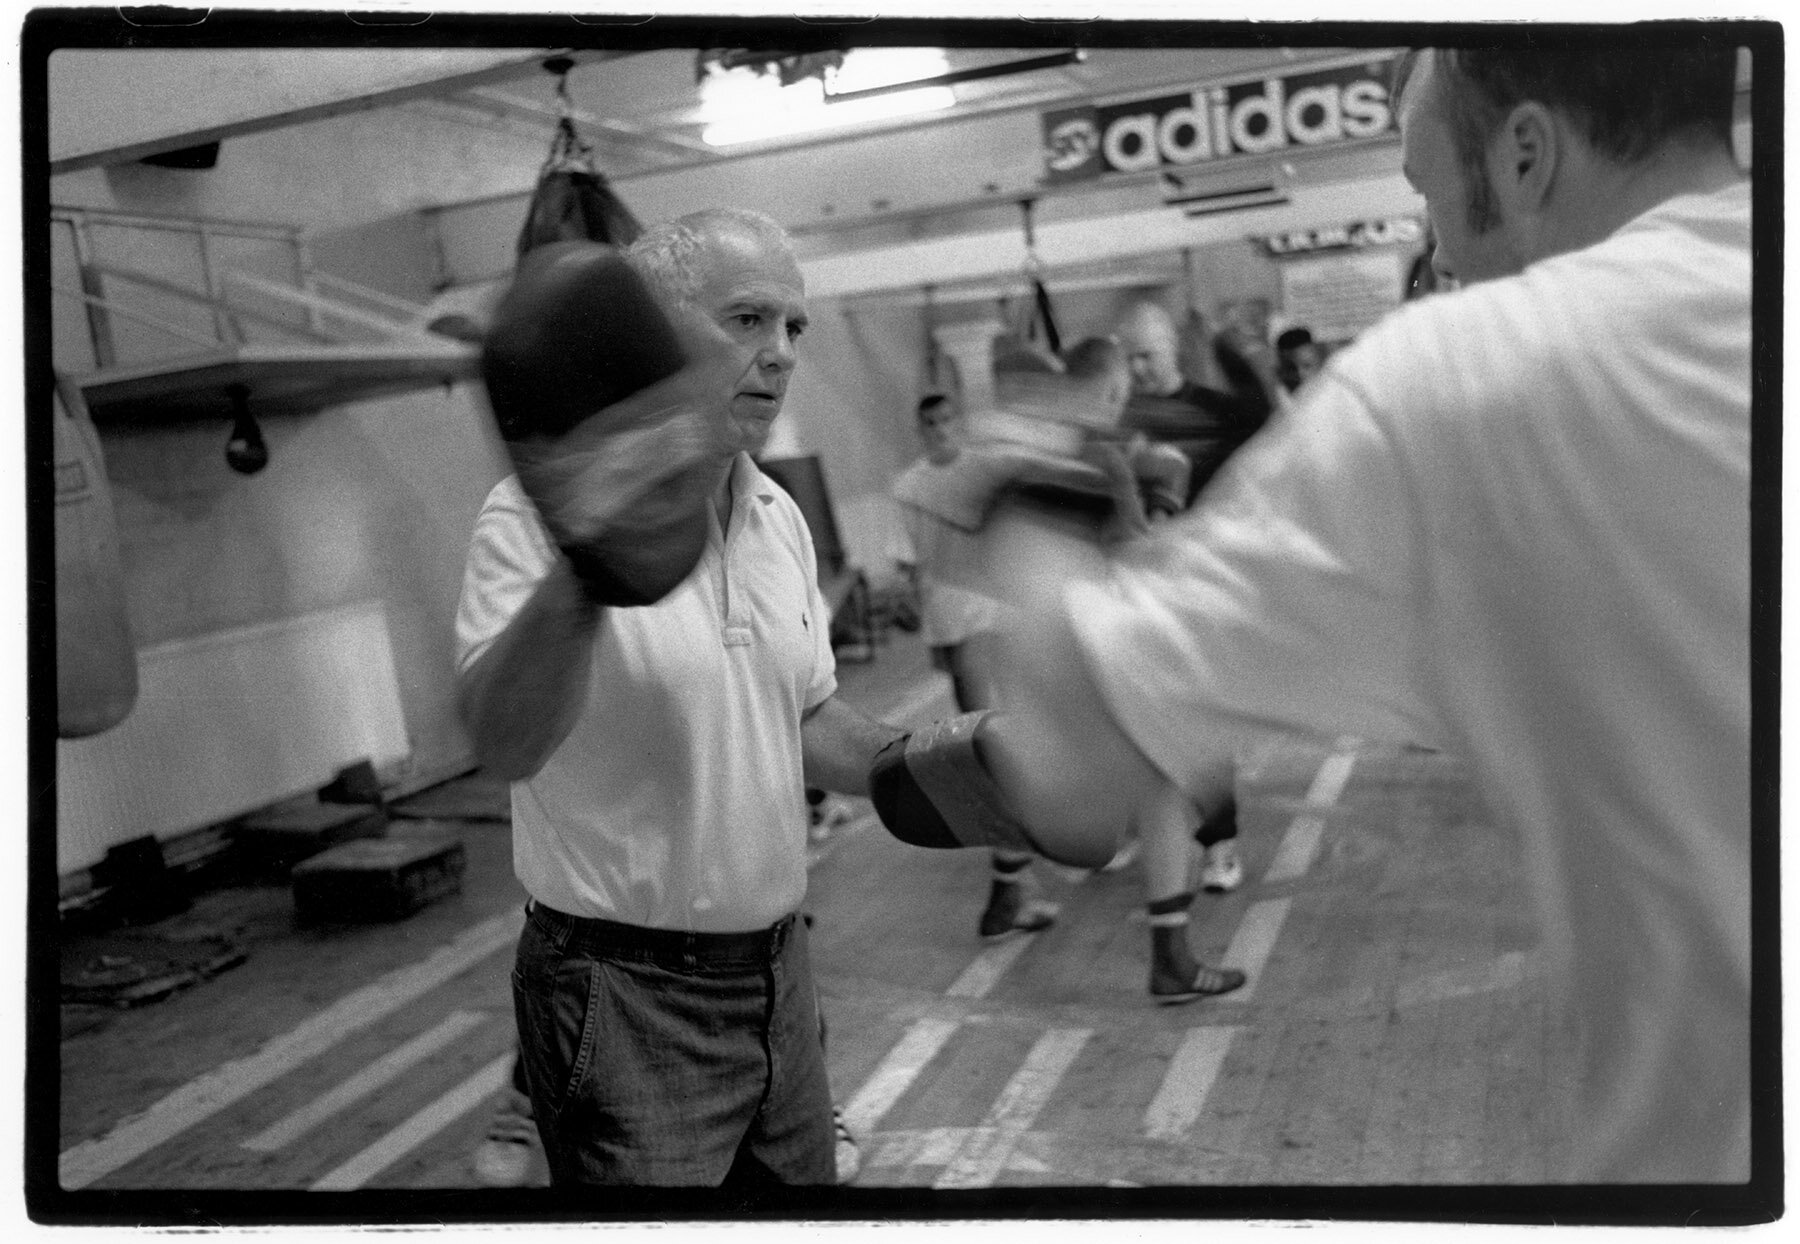 Sheffiled-boxing-0005.jpg